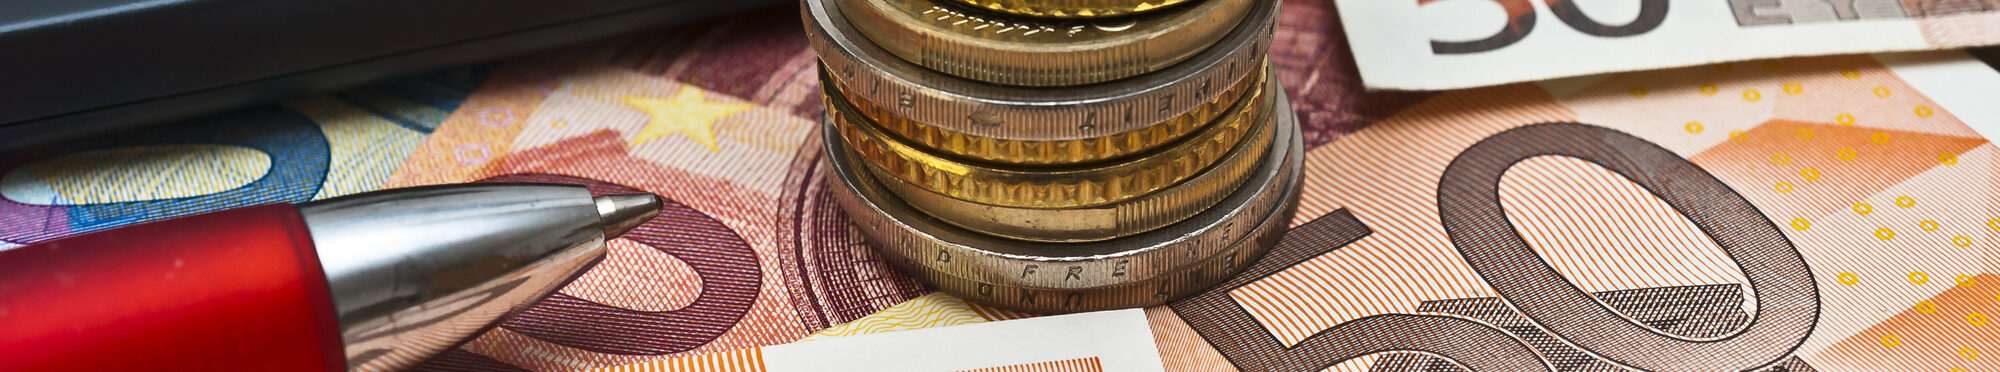 Motivbild Euro [Foto: ©Stockfotos-MG - stock.adobe.com]